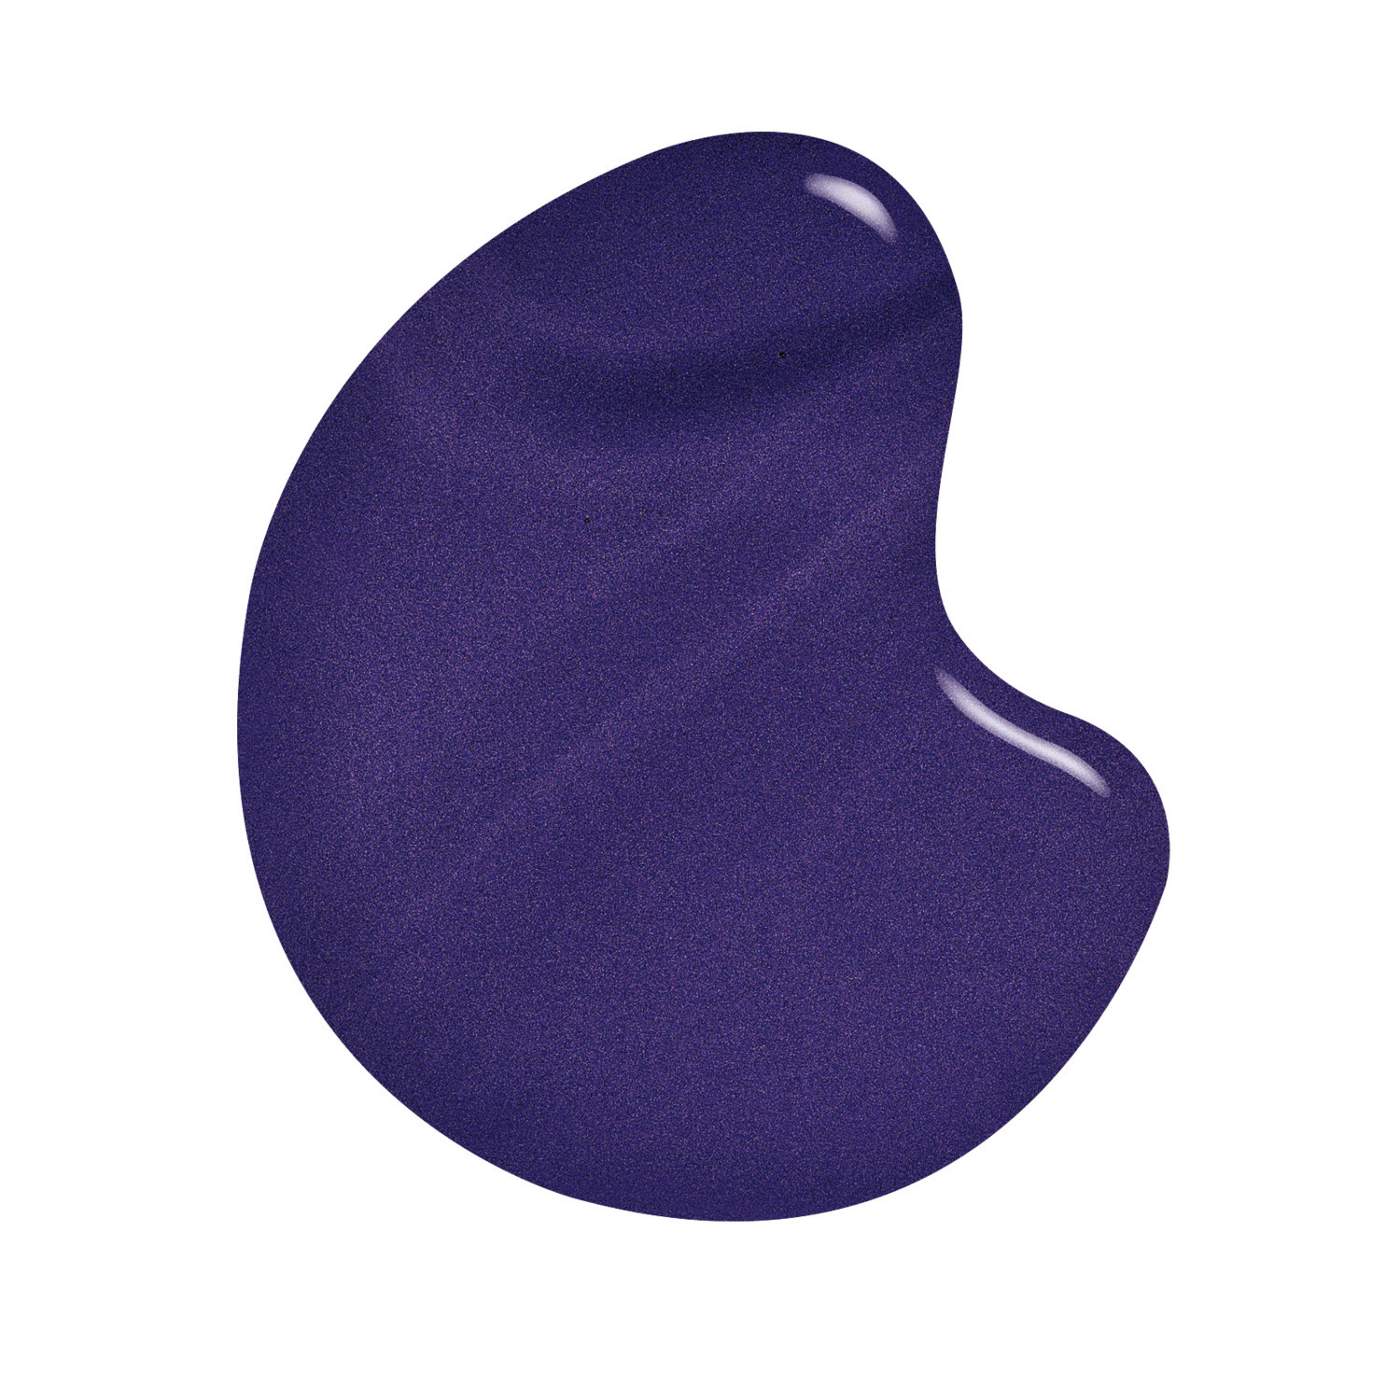 Sally Hansen Miracle Gel Nail Polish - Purplexed; image 3 of 6